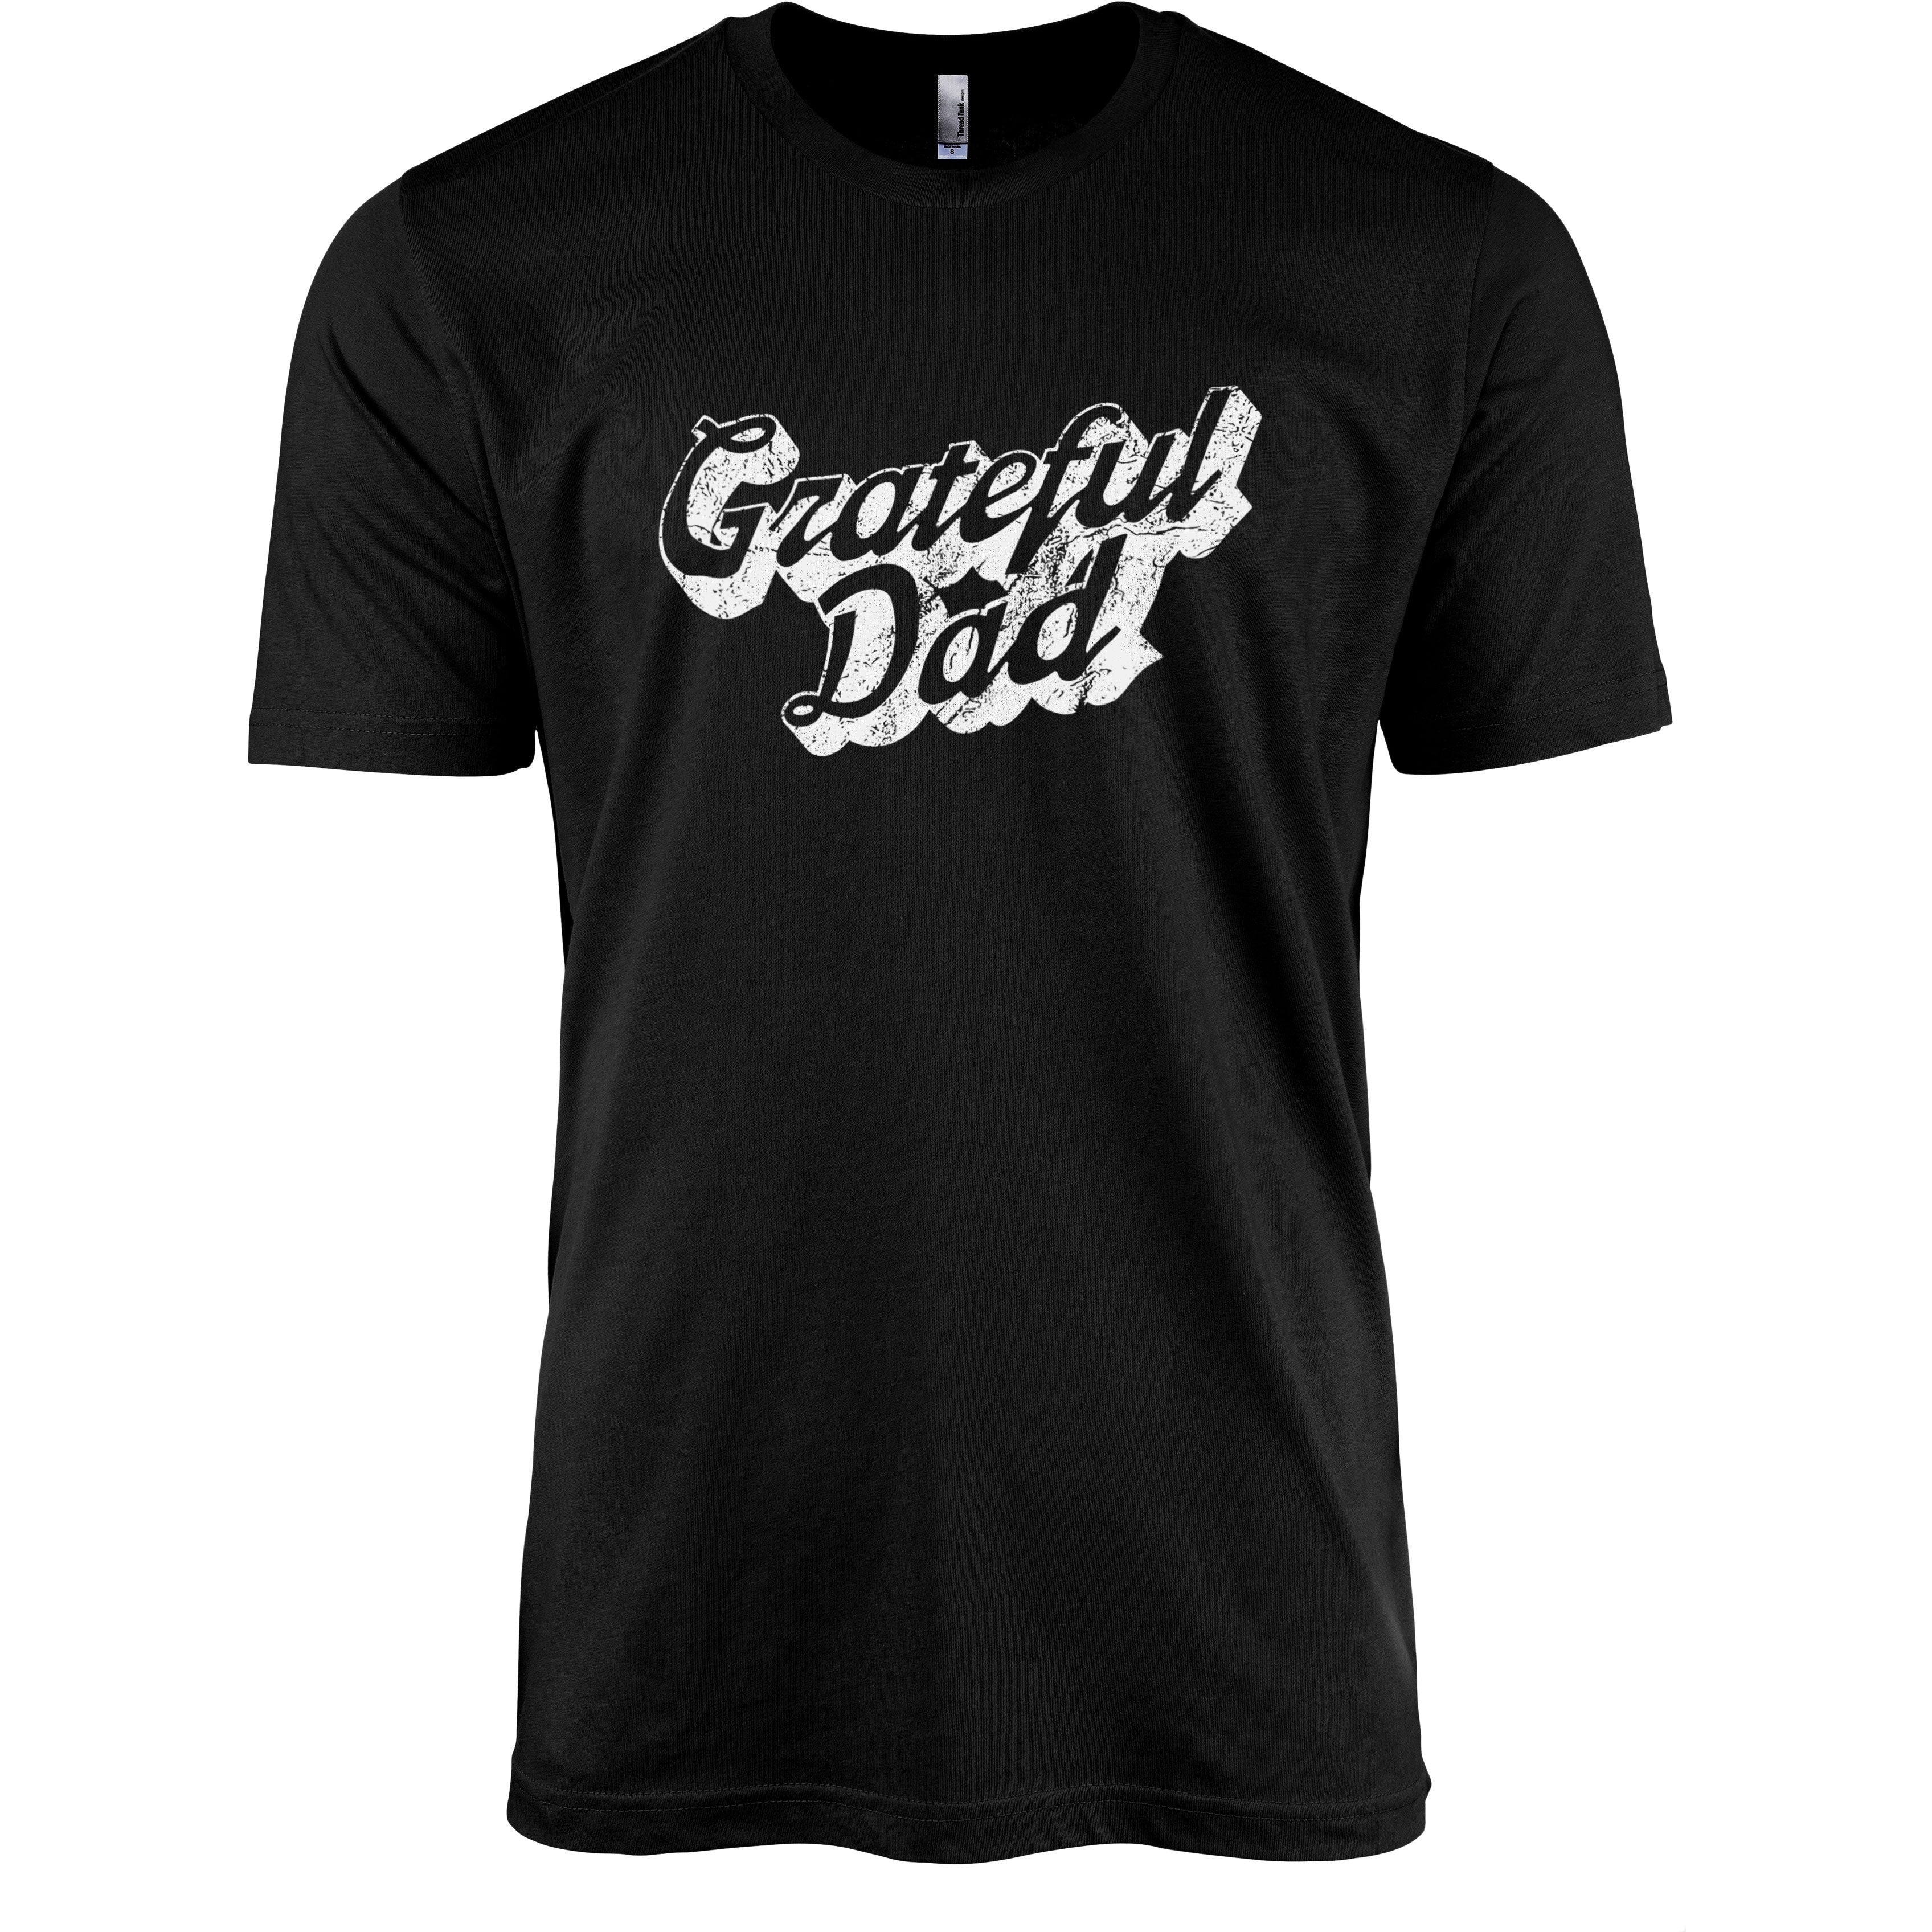 Thread Tank Grateful Dad Printed Graphic Men's Crew T-Shirt Tee